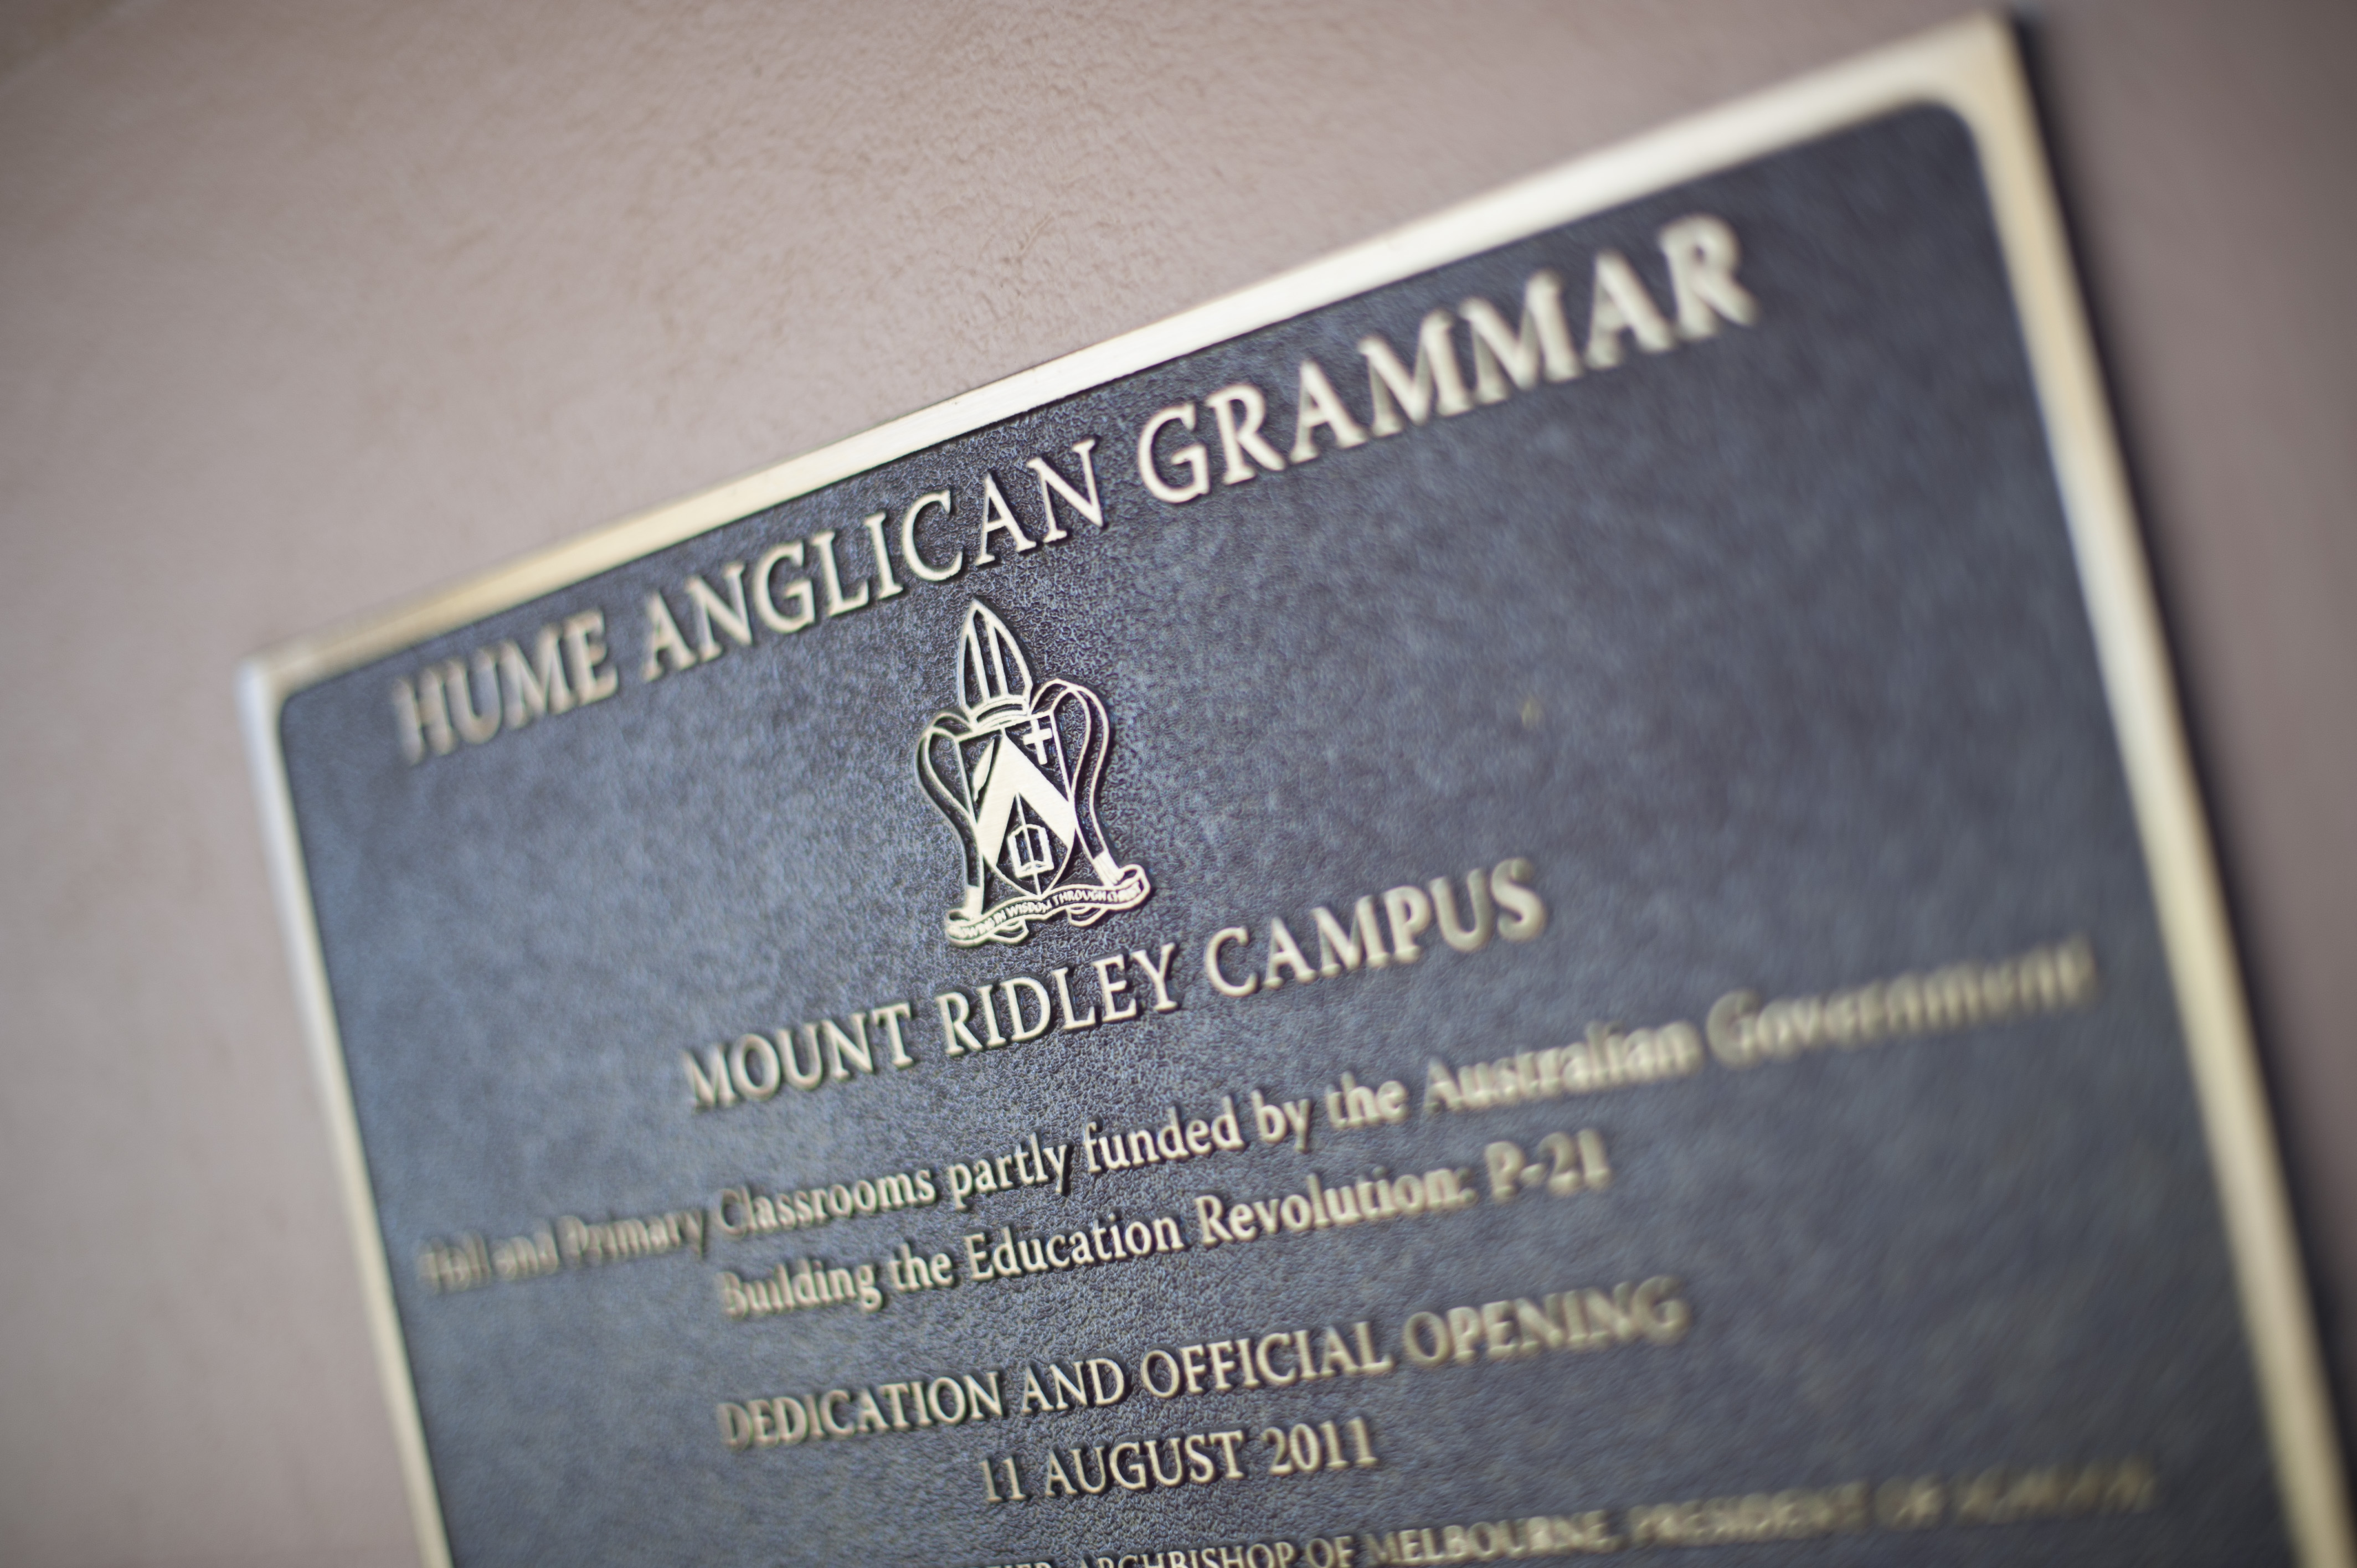 Hume Anglican Grammar Plaque